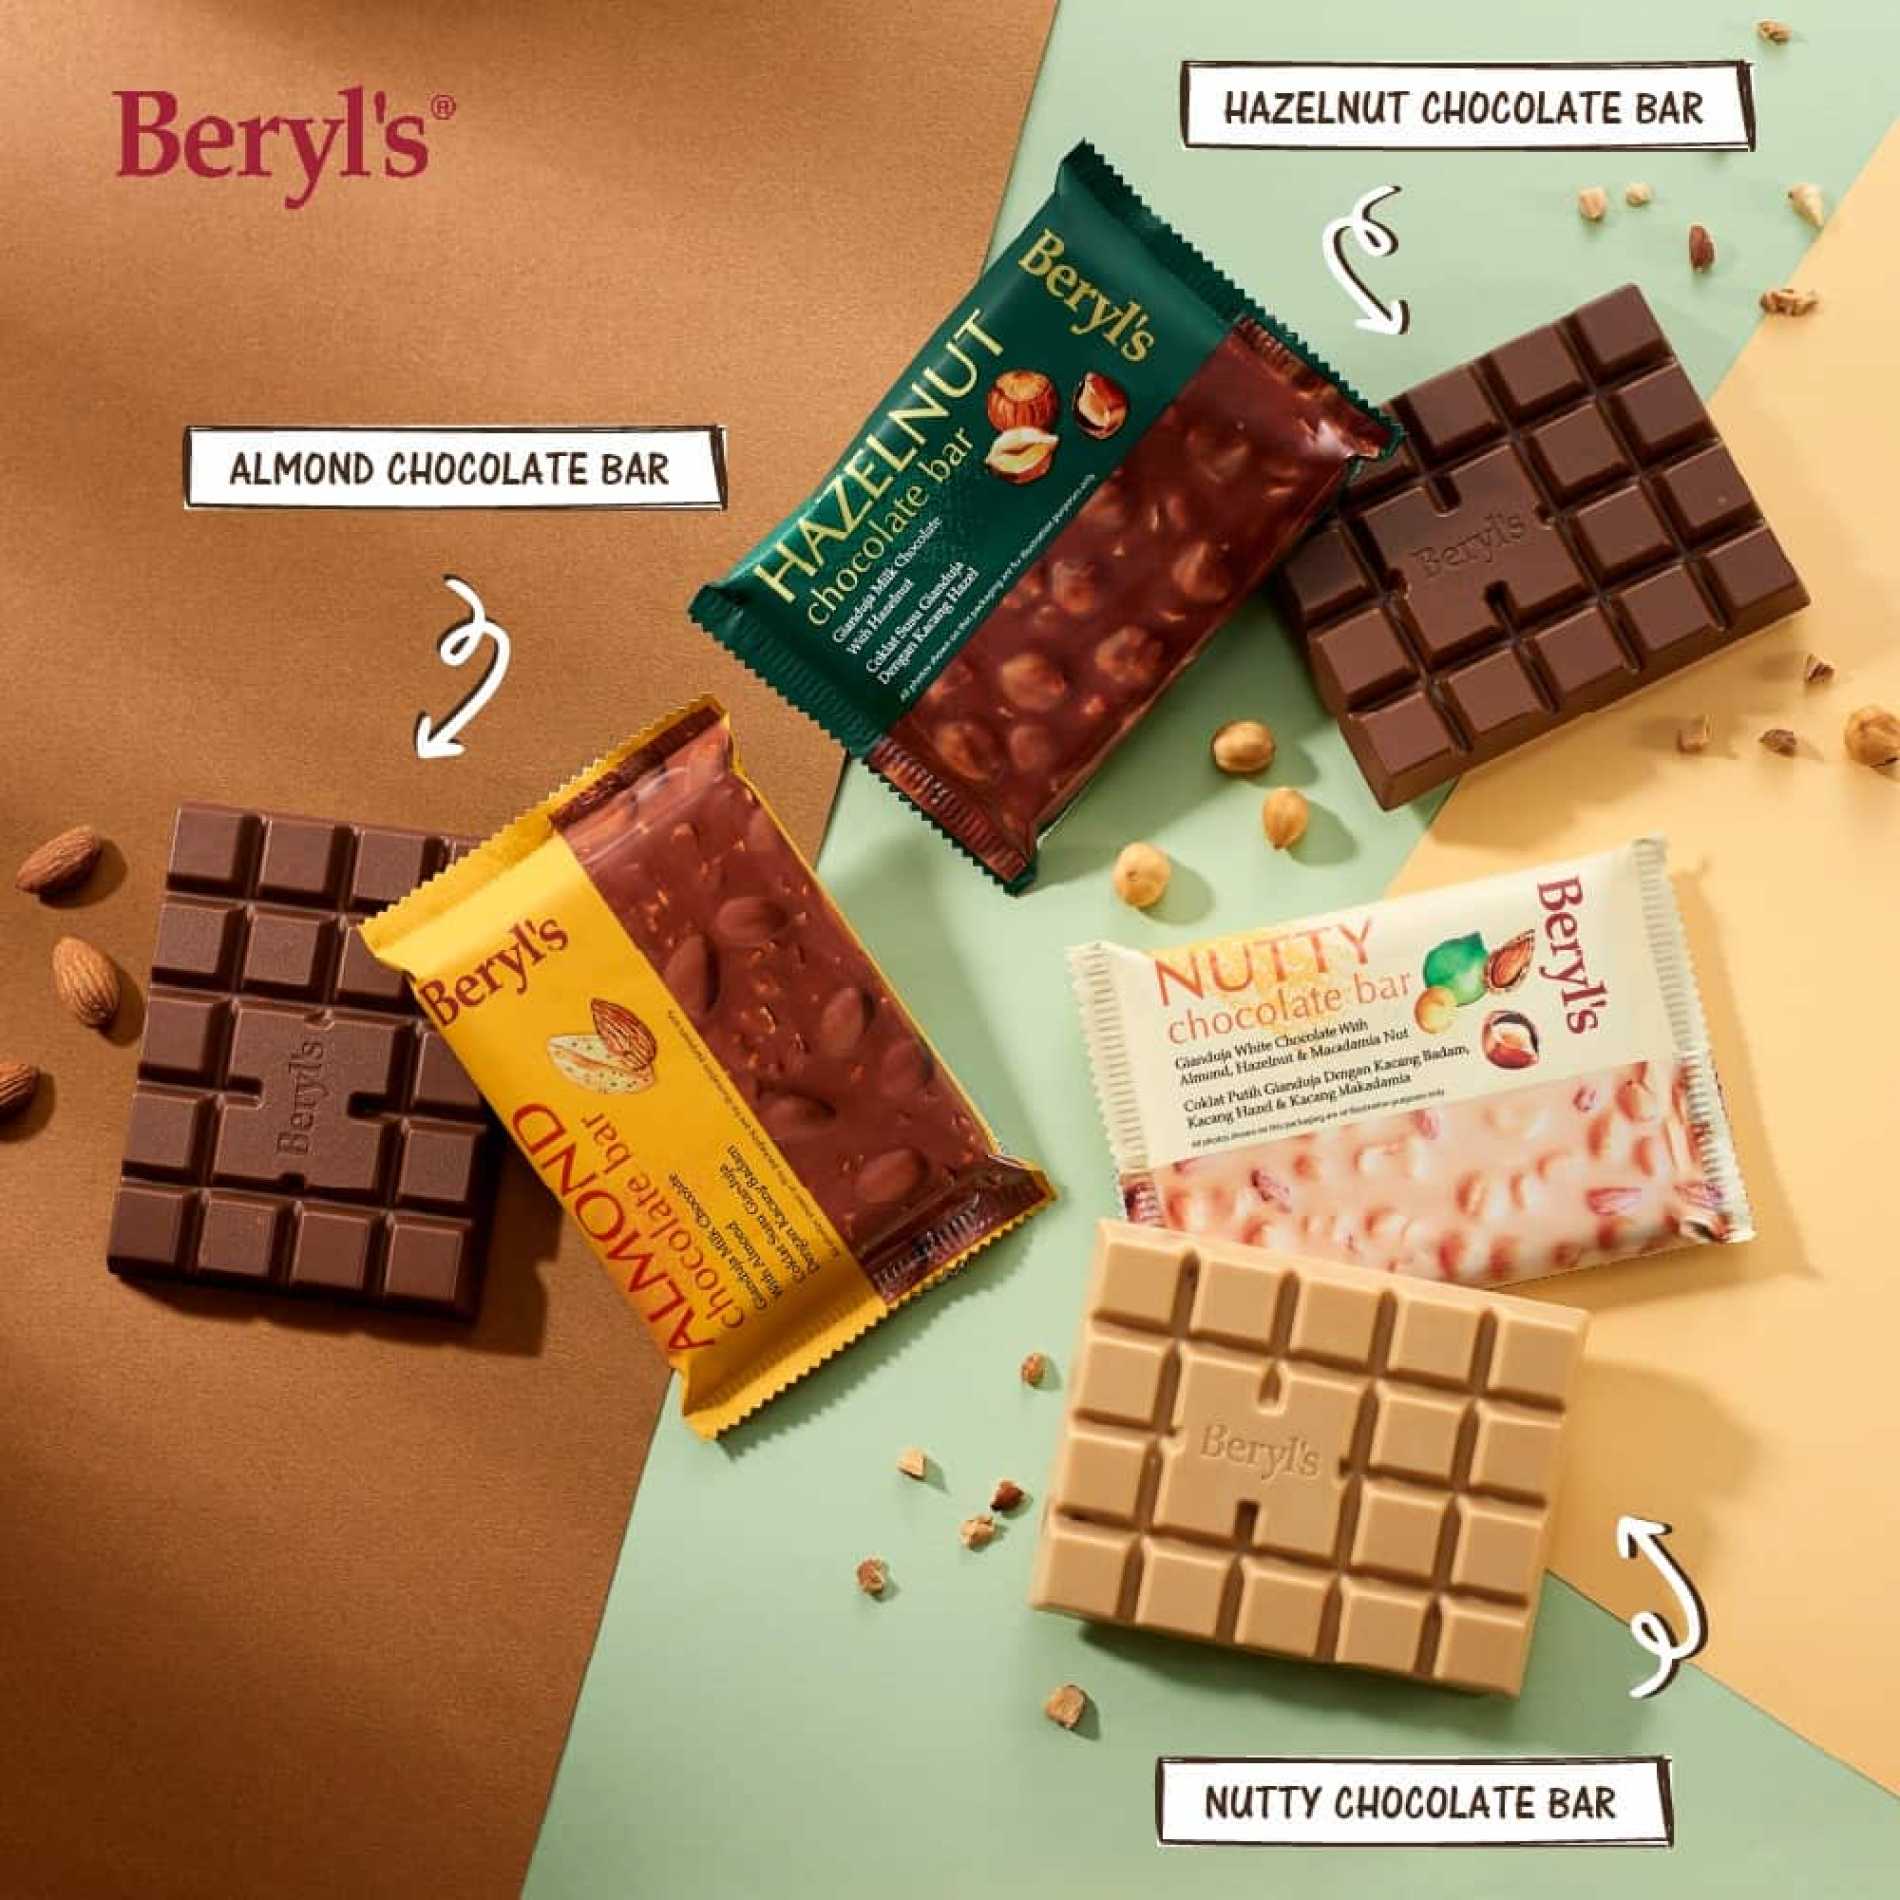 29-31 Aug 2020: Beryl's Chocolate Merdeka Free Shipping Promo Code 